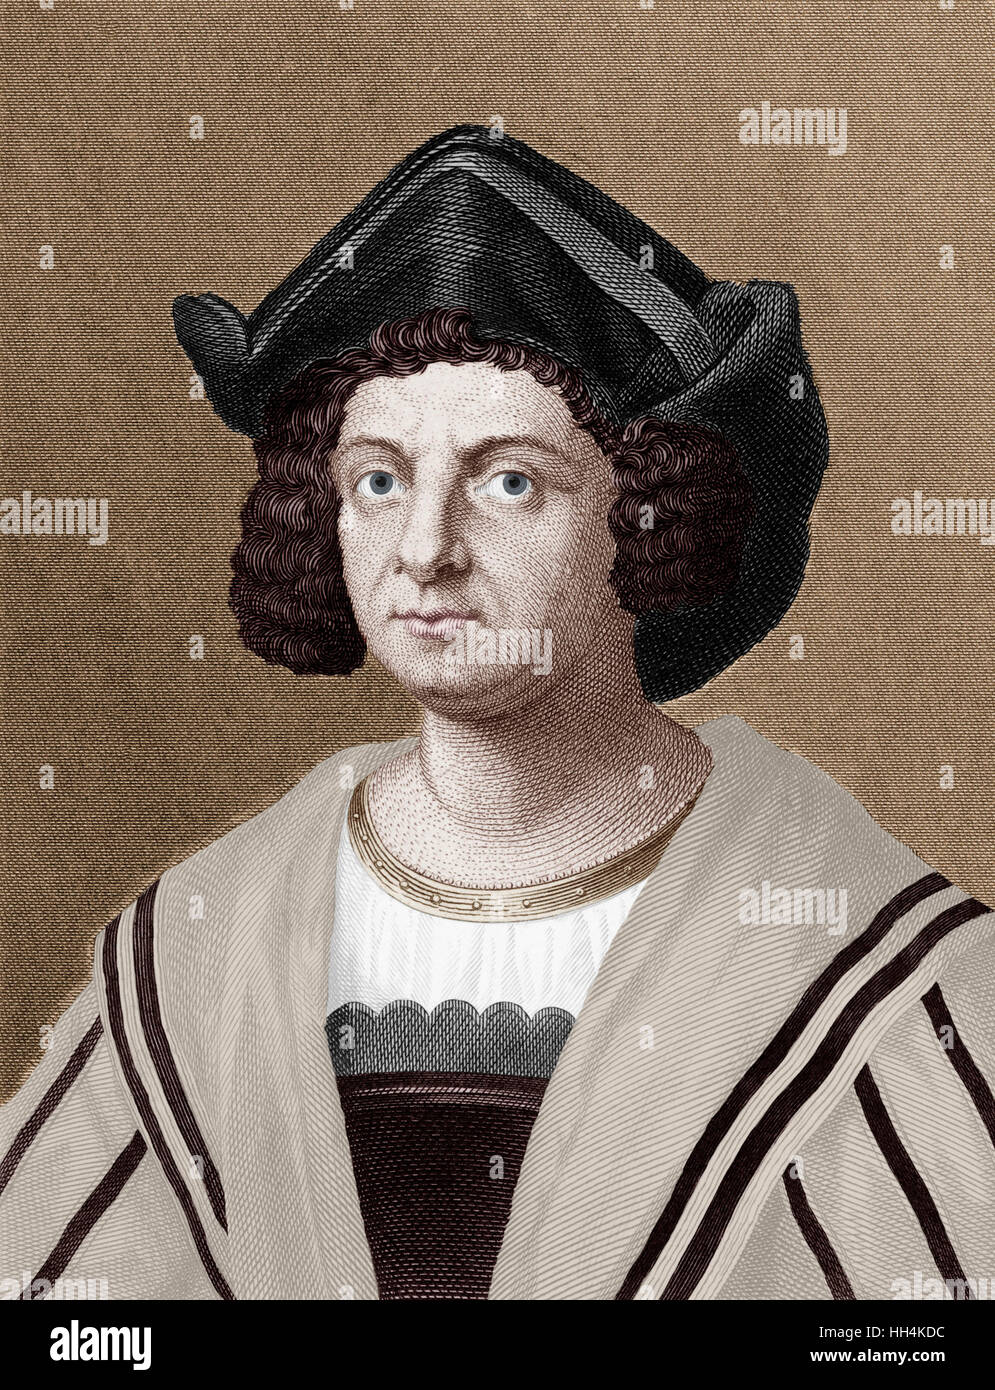 Christopher (Cristoforo) Columbus (1451-1506) - Italian explorer ...